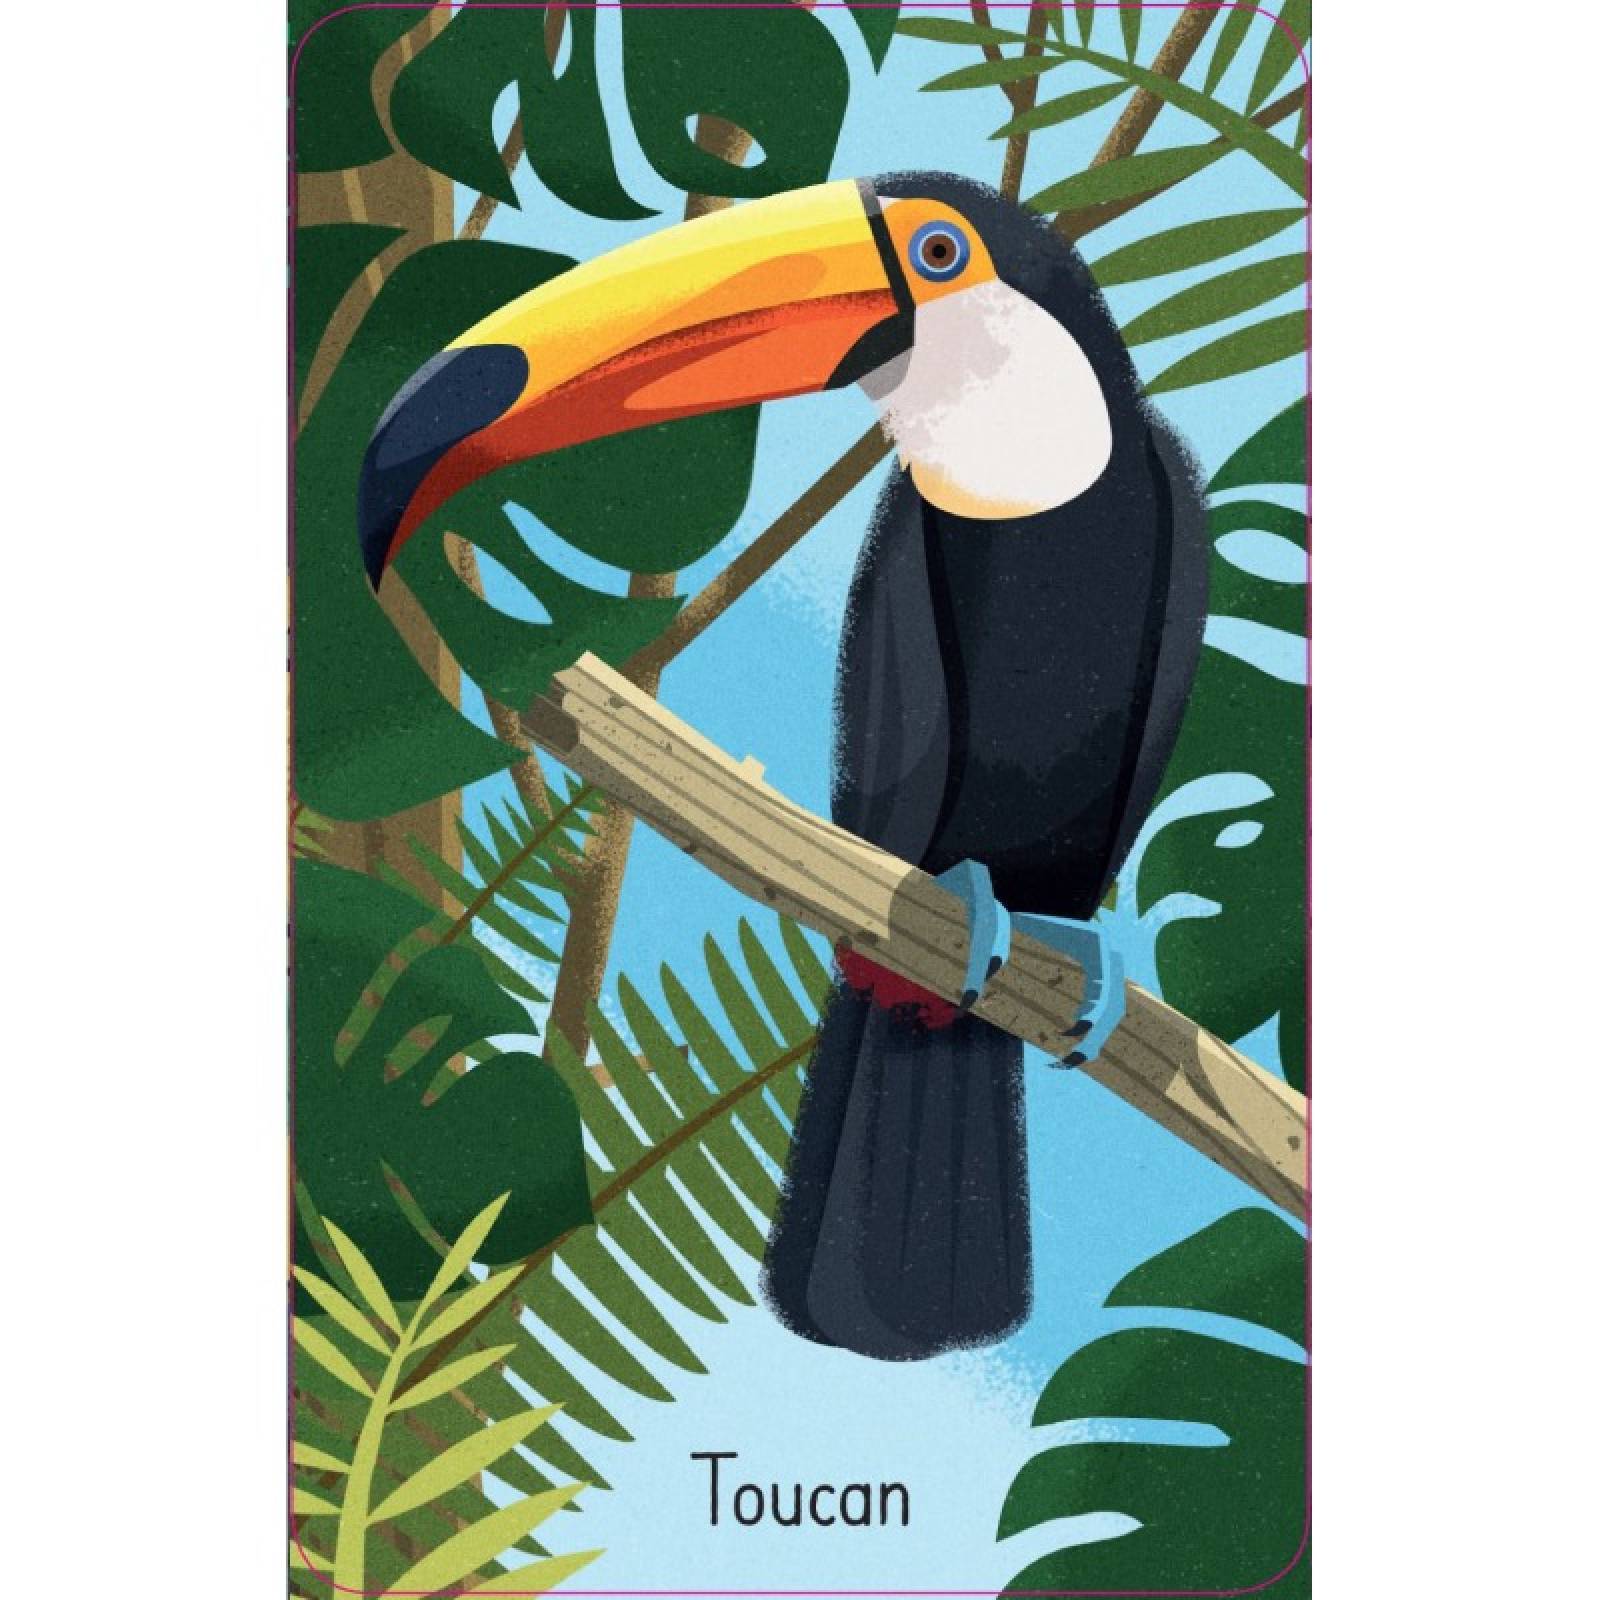 Jungle Snap Card Game thumbnails